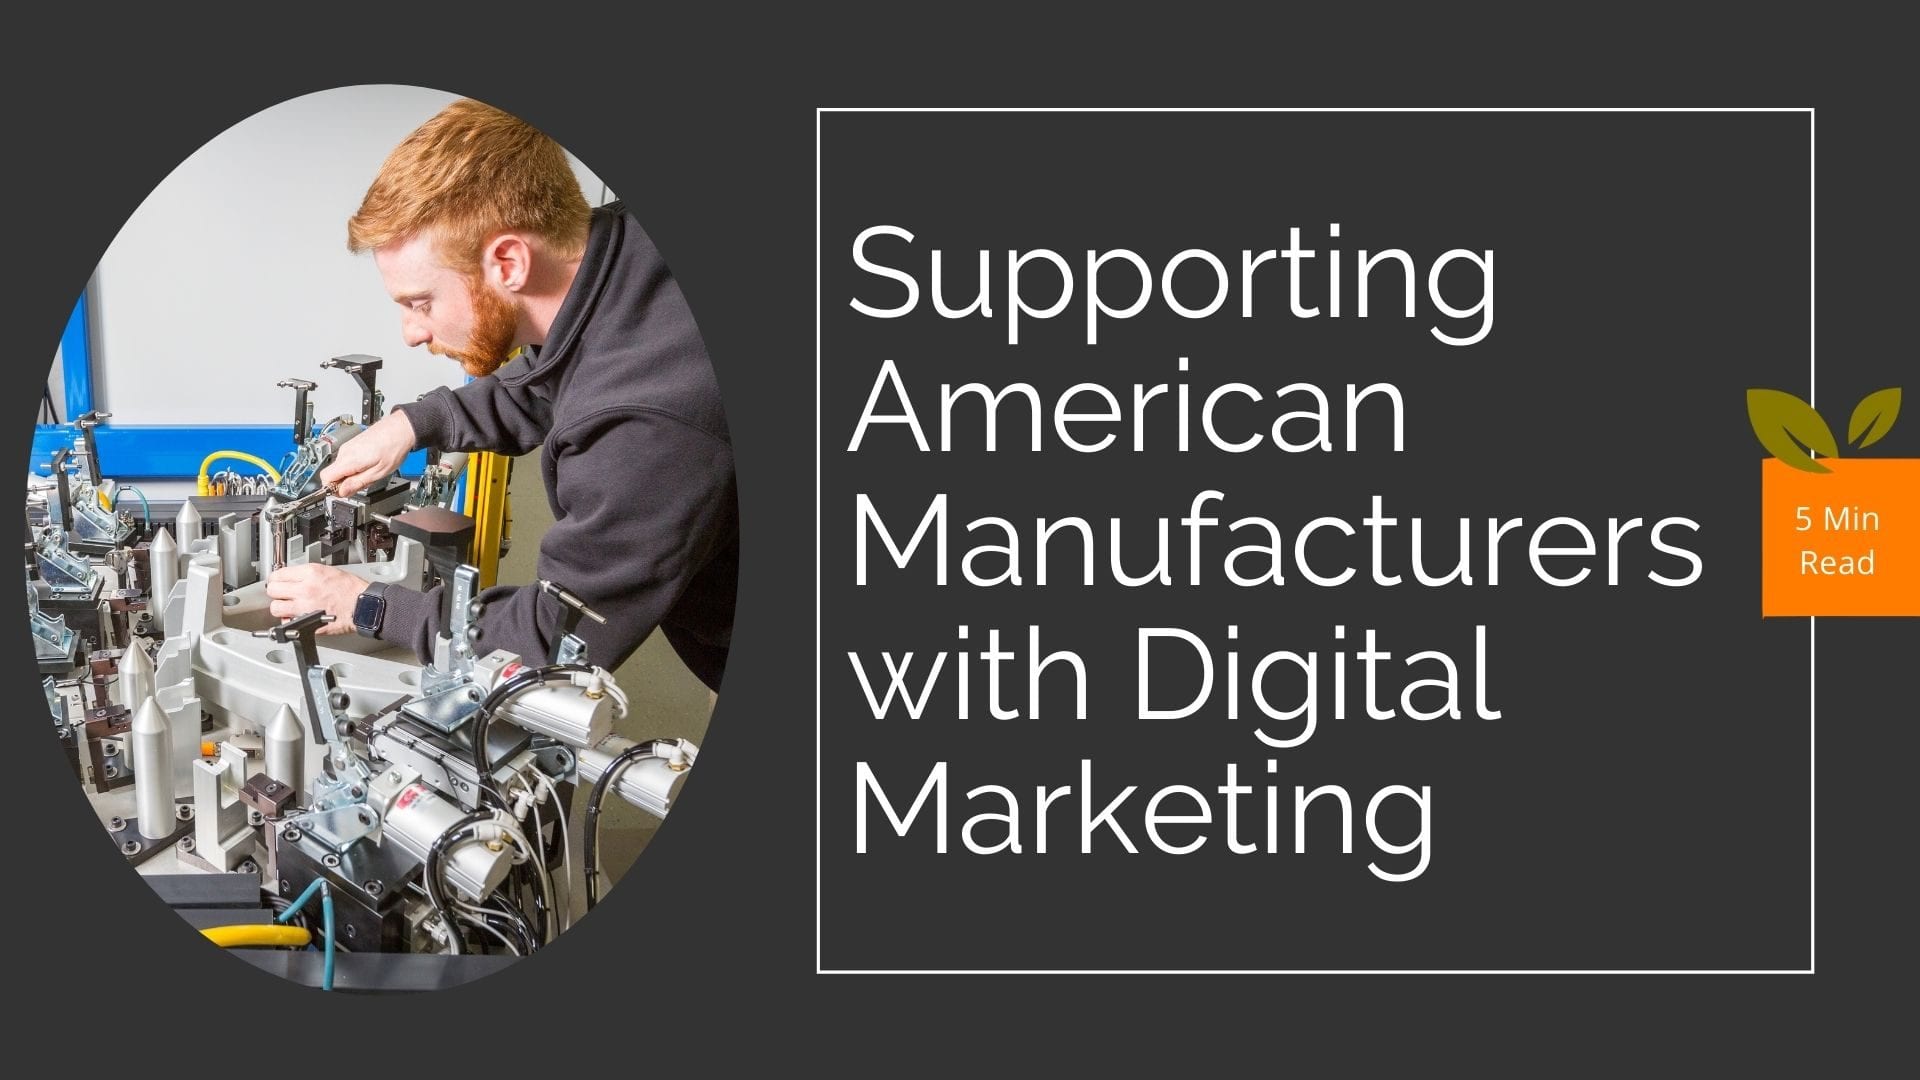 Digital marketing for manufacturers